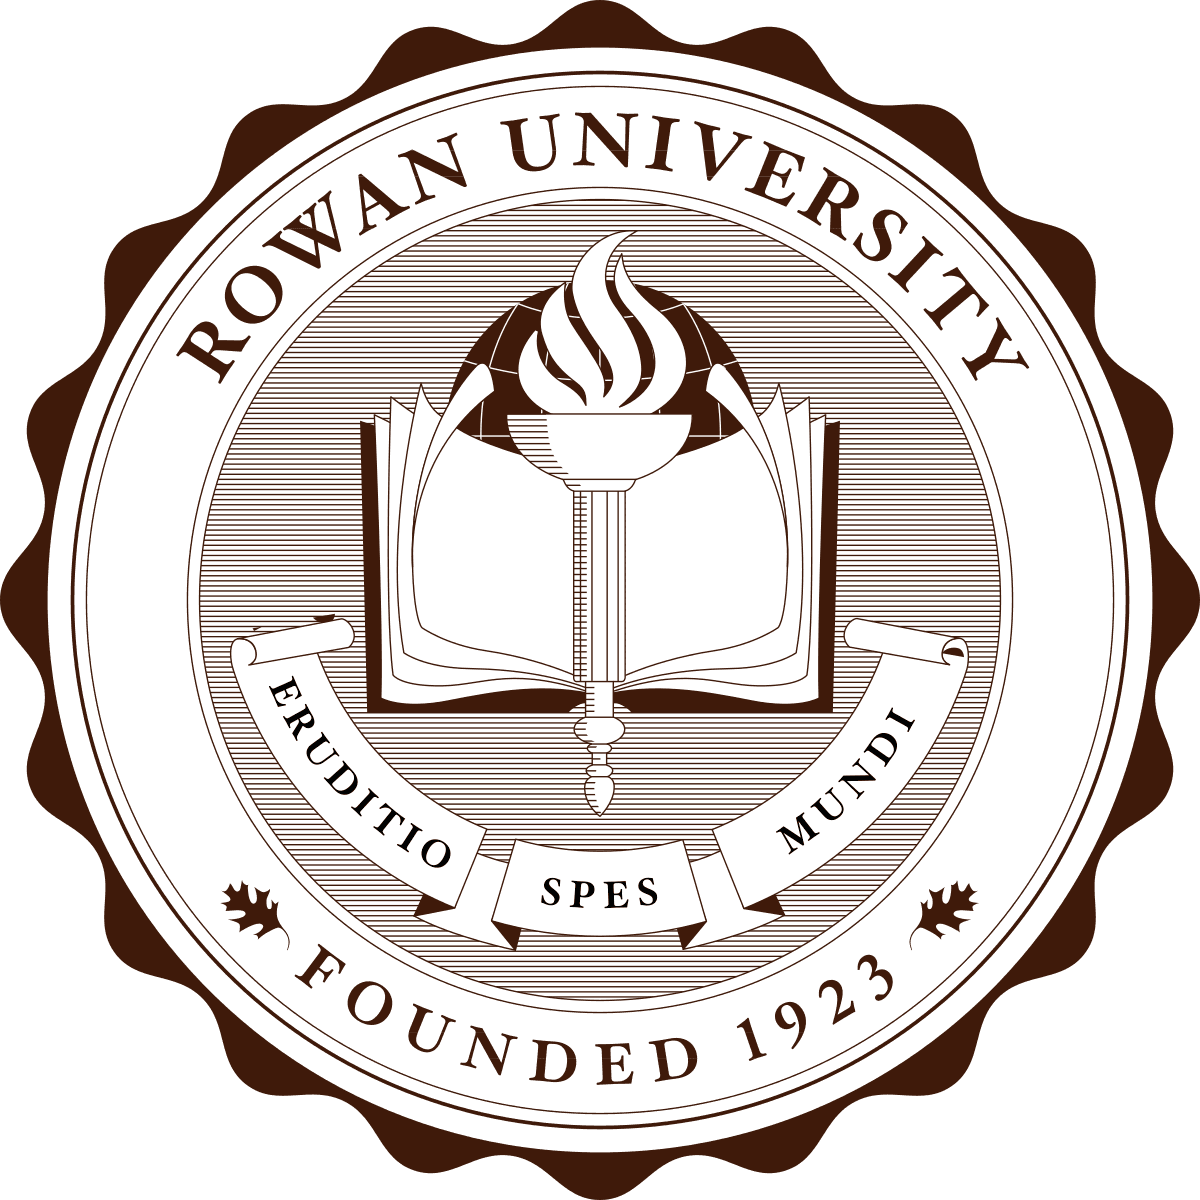 Database Fundamentals Certificate of Undergraduate Study